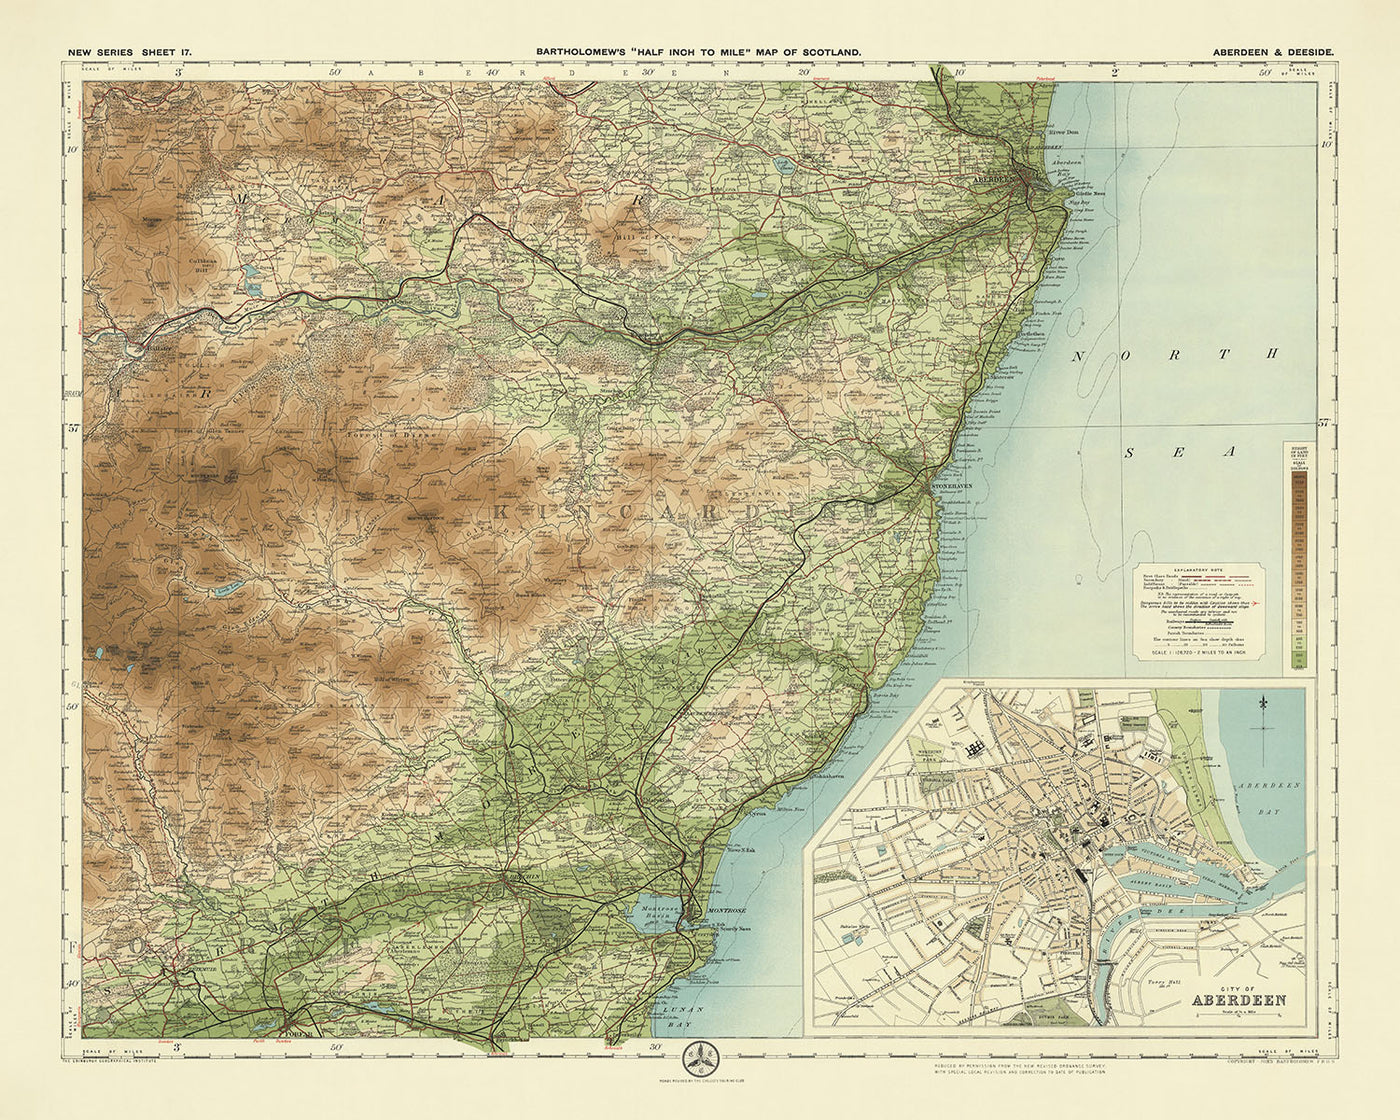 Old OS Map of Aberdeen & Deeside by Bartholomew, 1901: Inset City Plan, River Dee, Bennachie, Dunnottar Castle, Loch of Skene, North Sea Coast